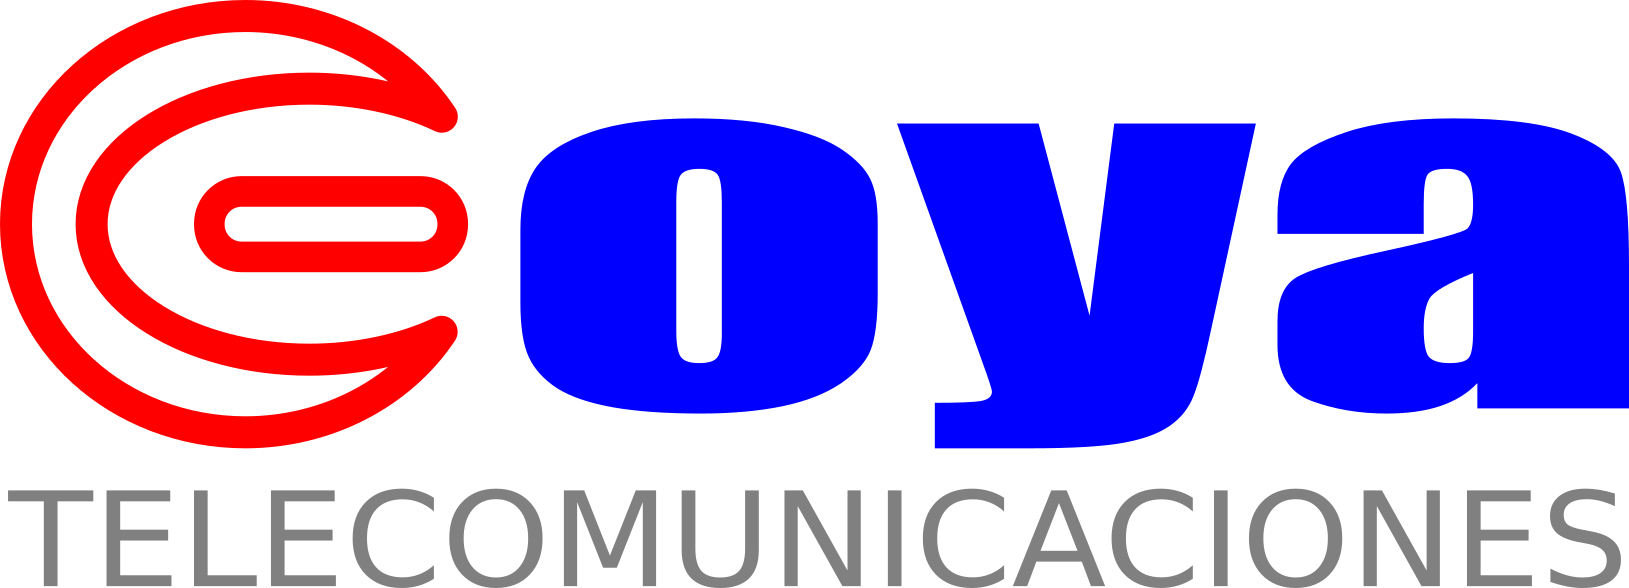 Goya Telecomunicaciones